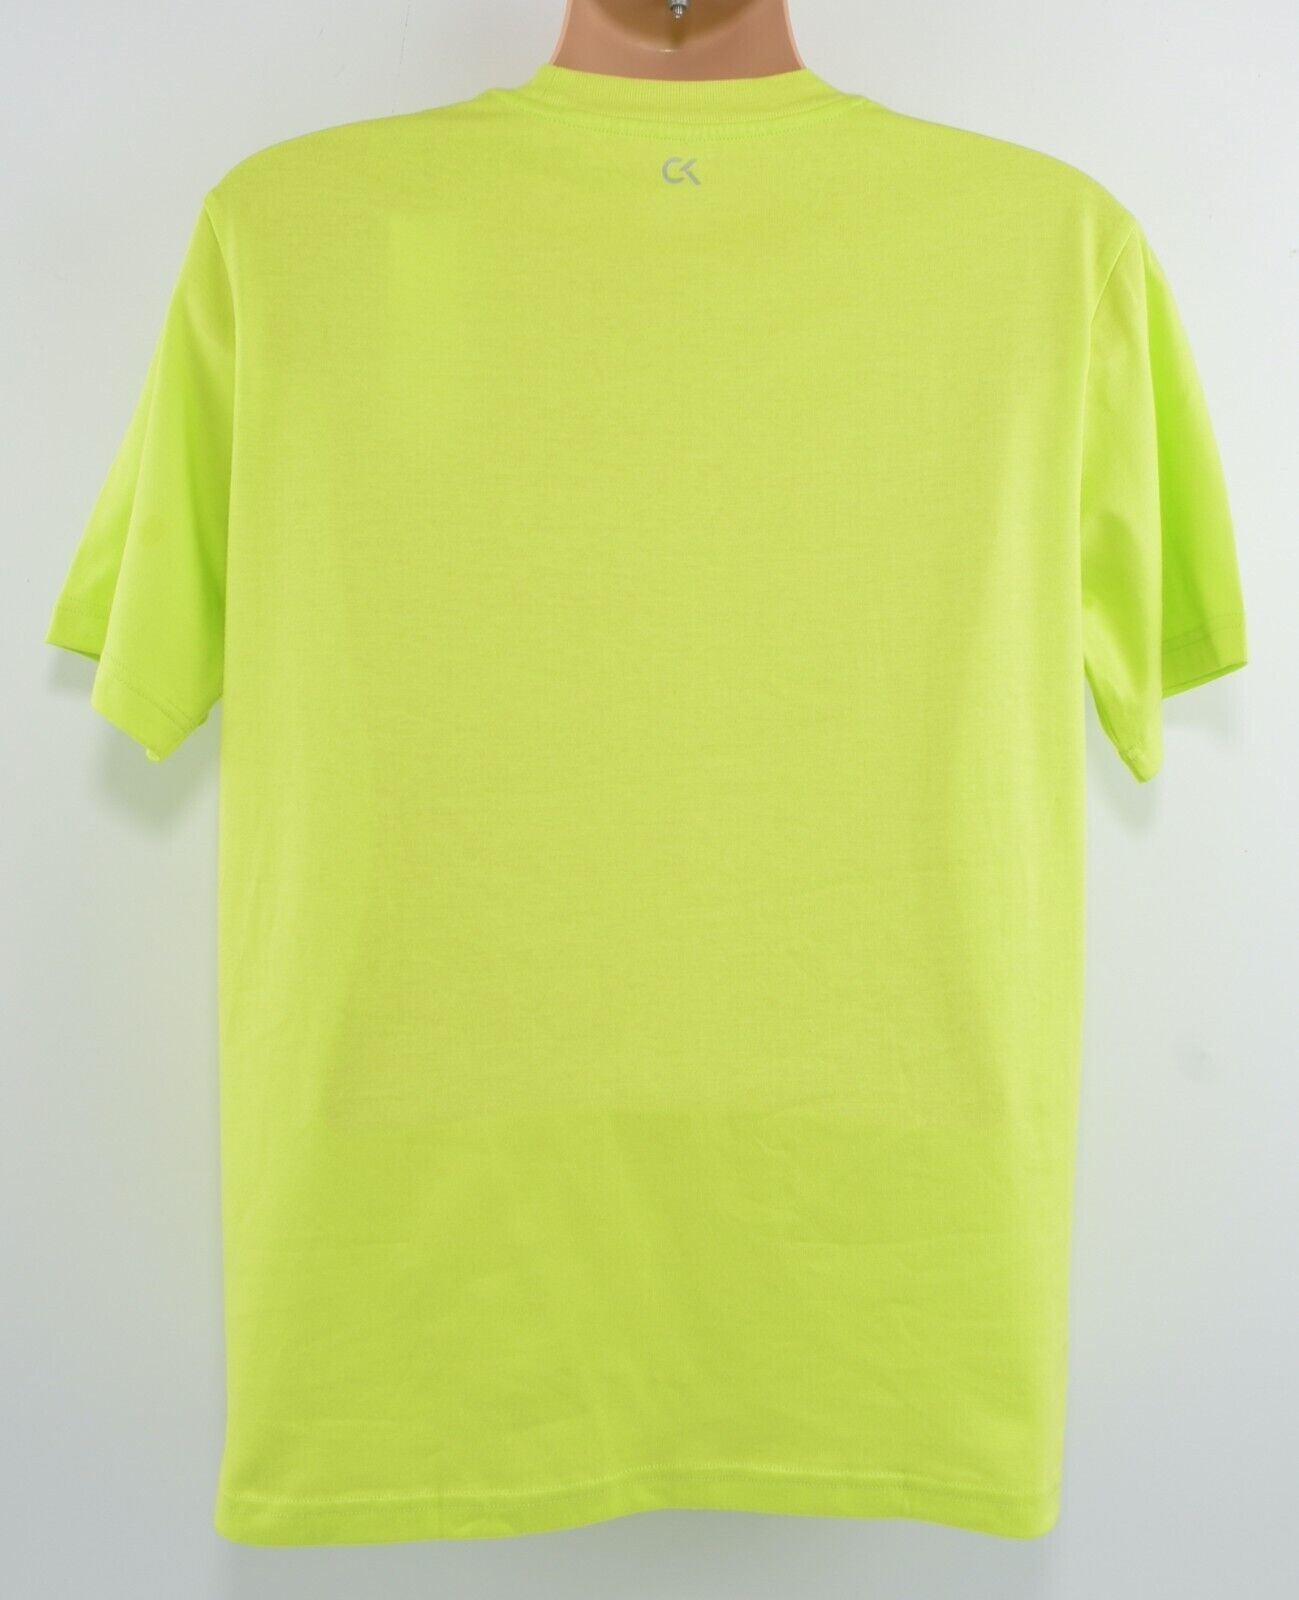 CALVIN KLEIN Performance: Men's Crew Neck T-shirt, Acid Lime, size MEDIUM